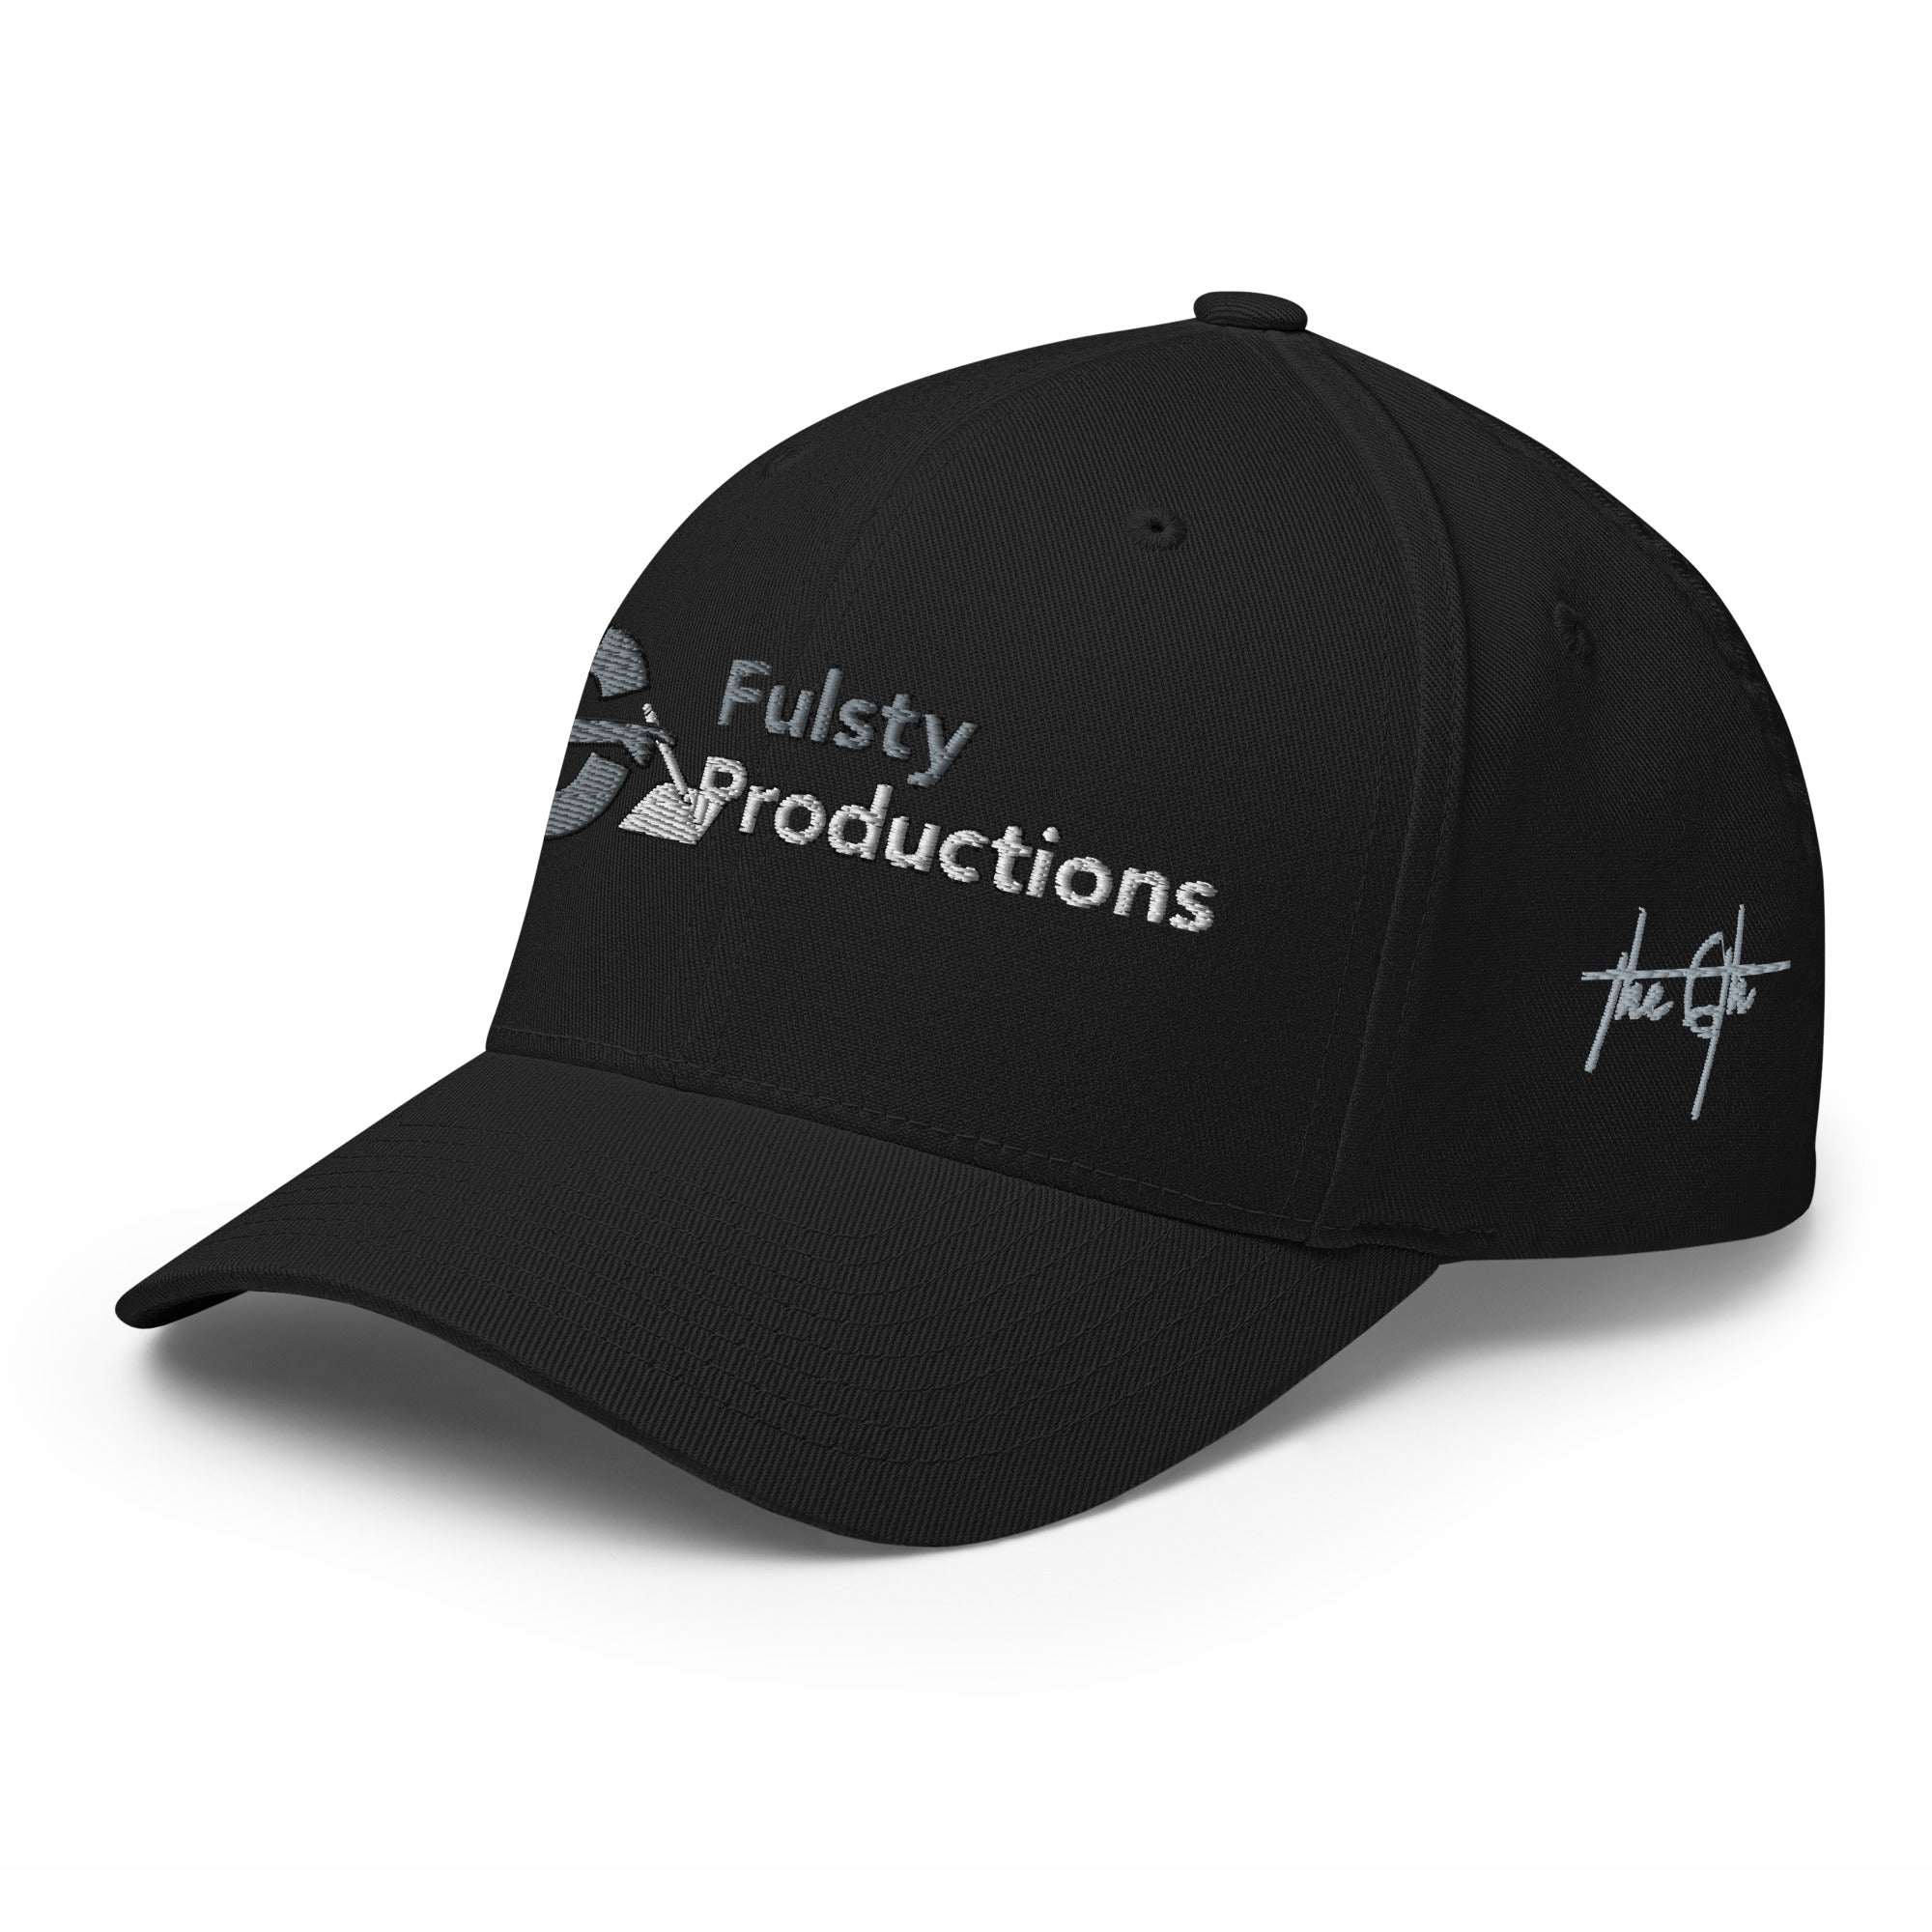 C Fulsty Productions Flexfit Cap